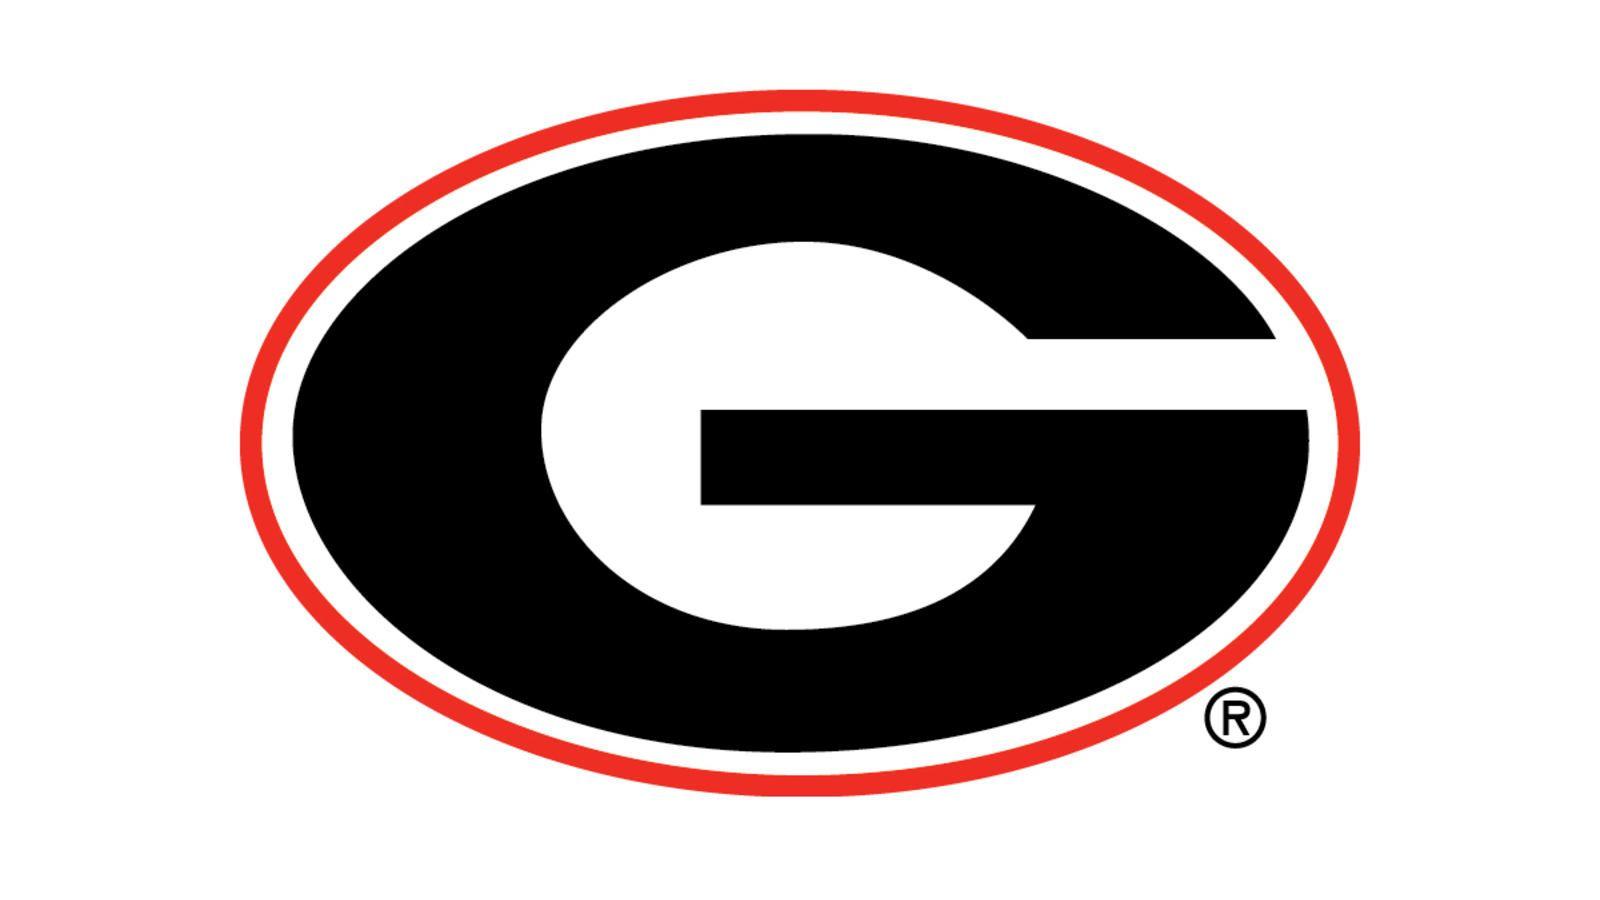 UGA G Logo - Georgia Athletics Introduces New Brand Identity System - Nike News